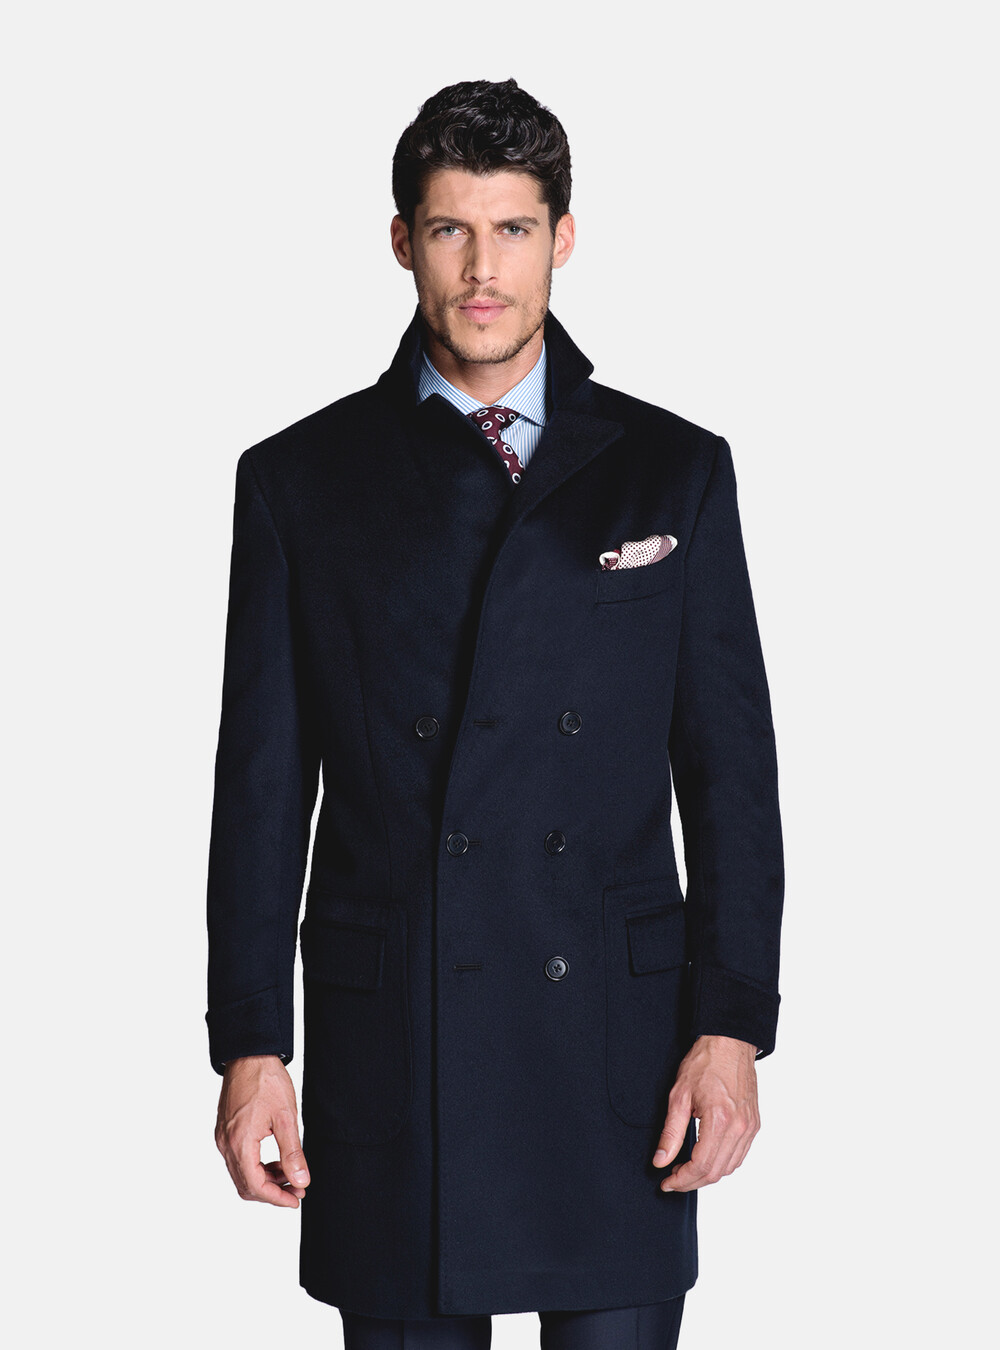 Double-breasted coat 100% cashmere | GutteridgeUS | Men's catalog ...